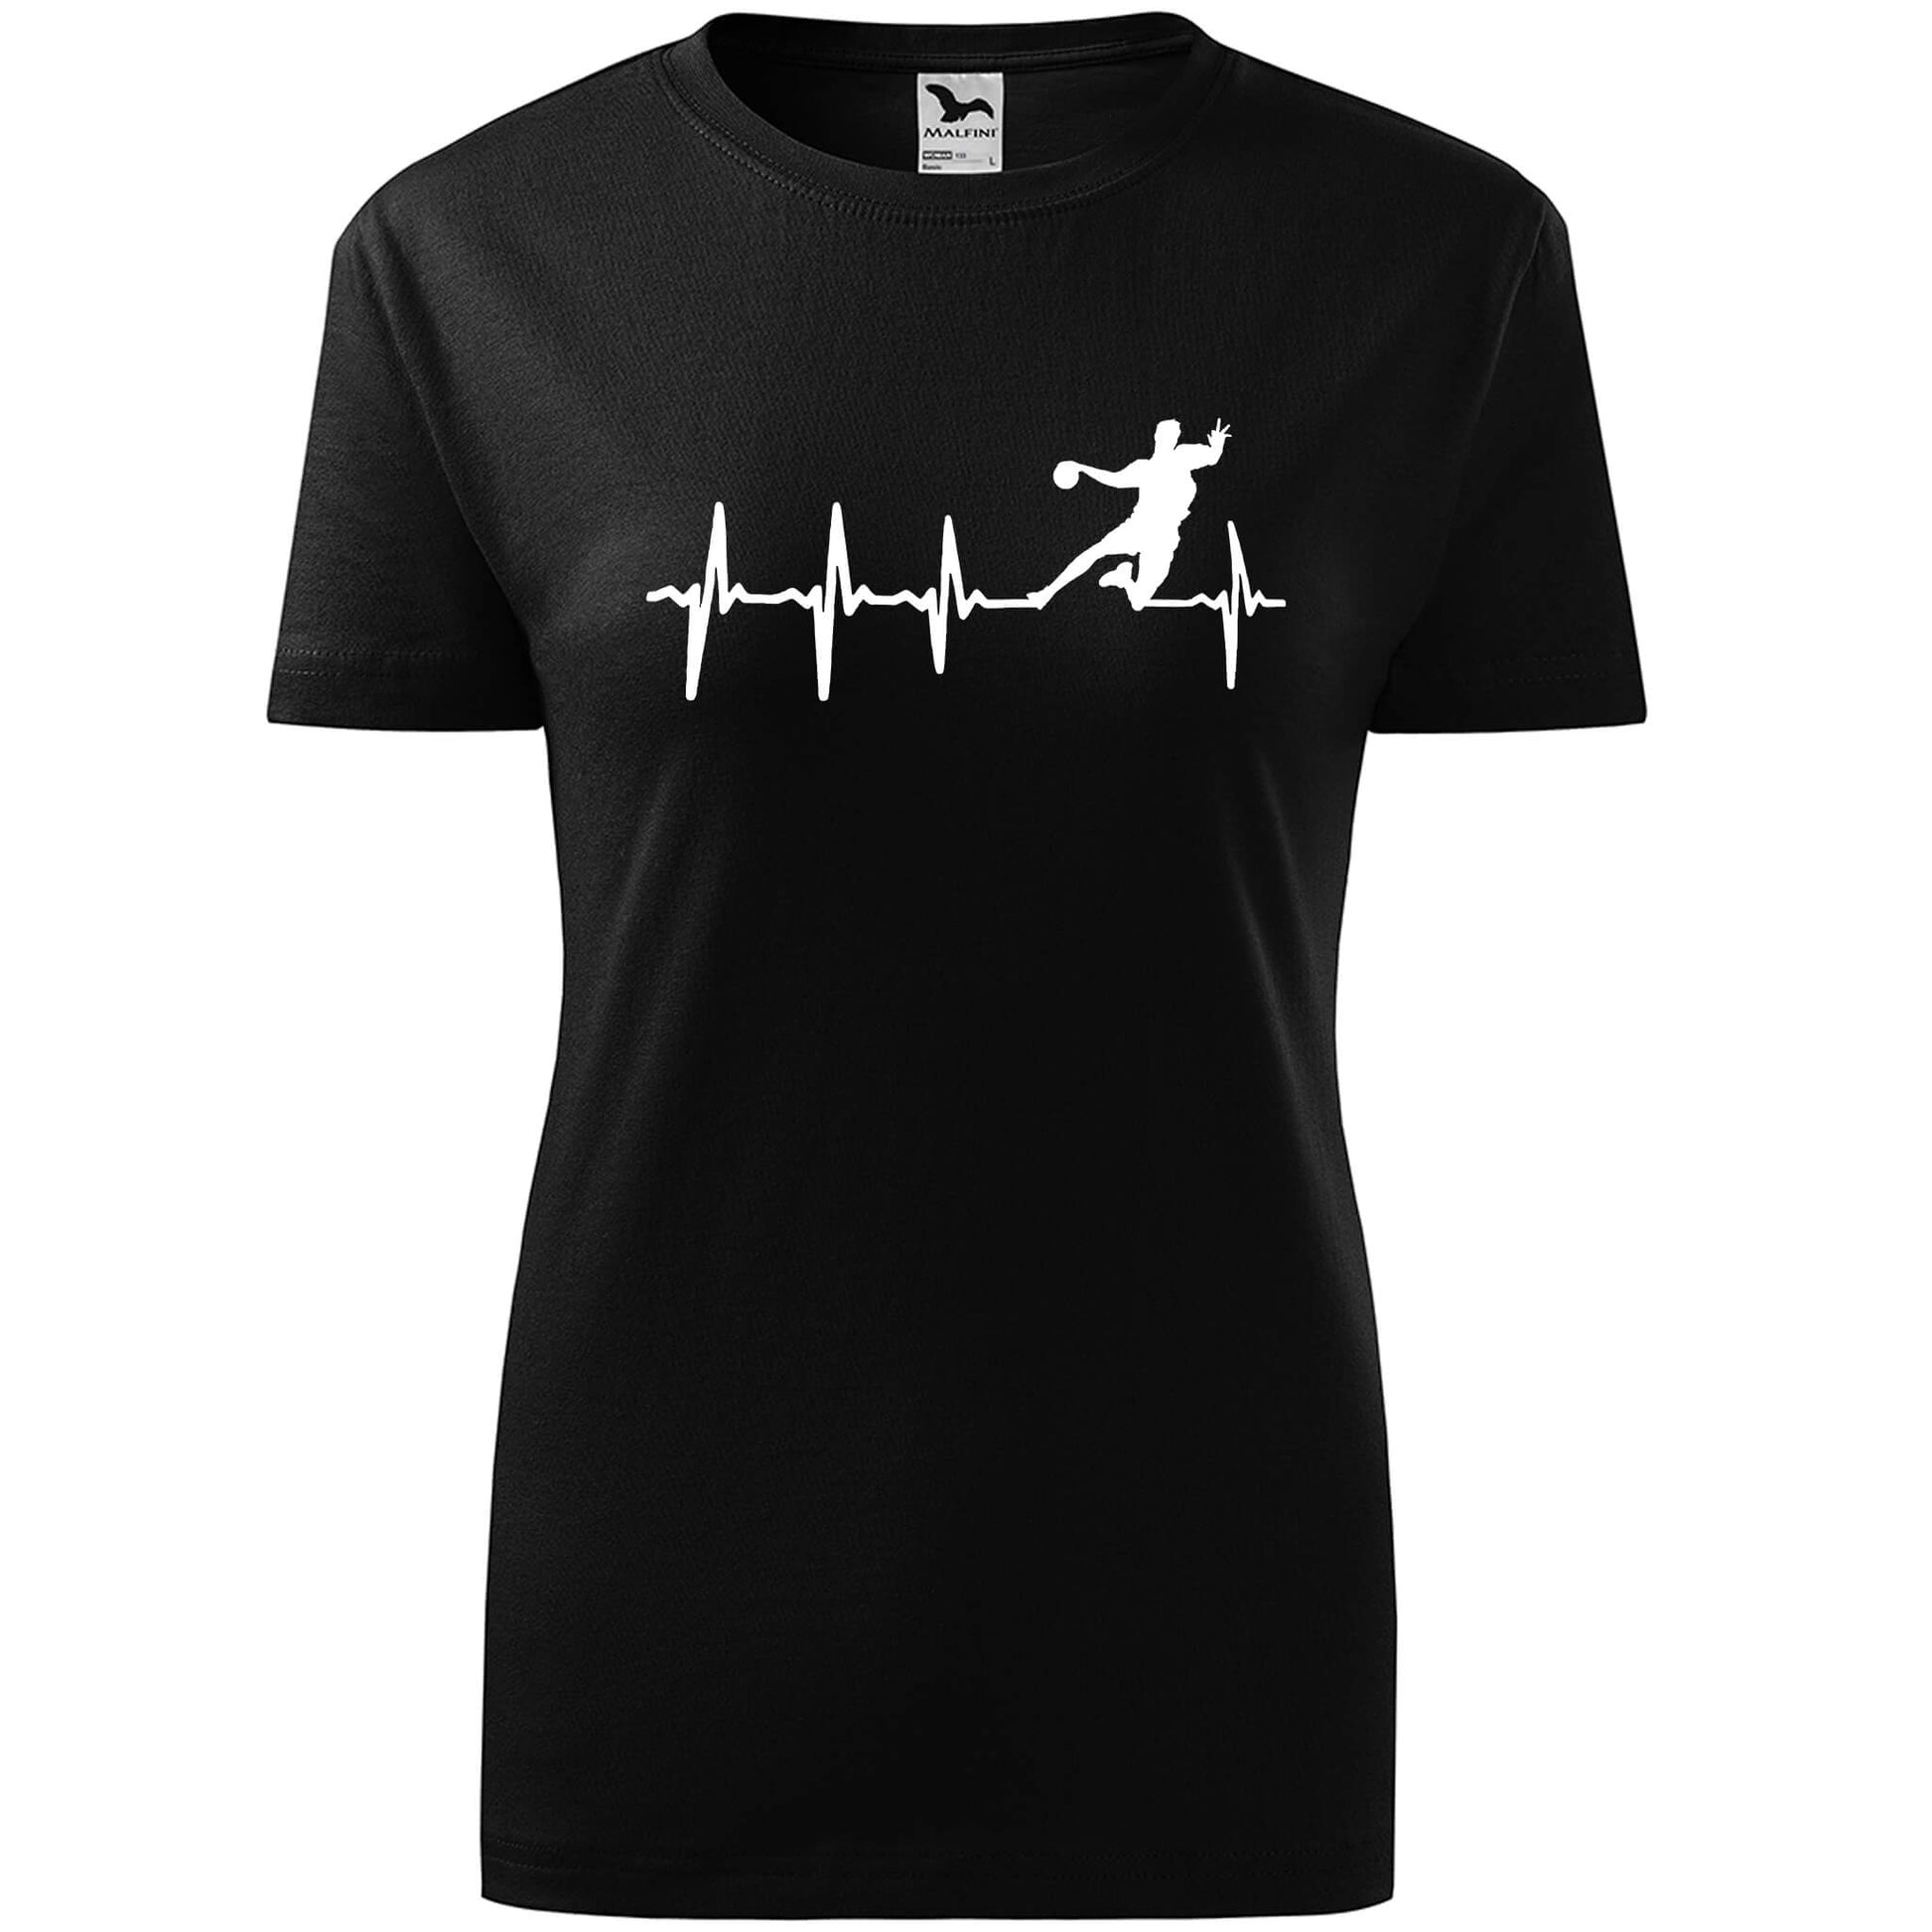 T-shirt - EKG - Handball - rvdesignprint